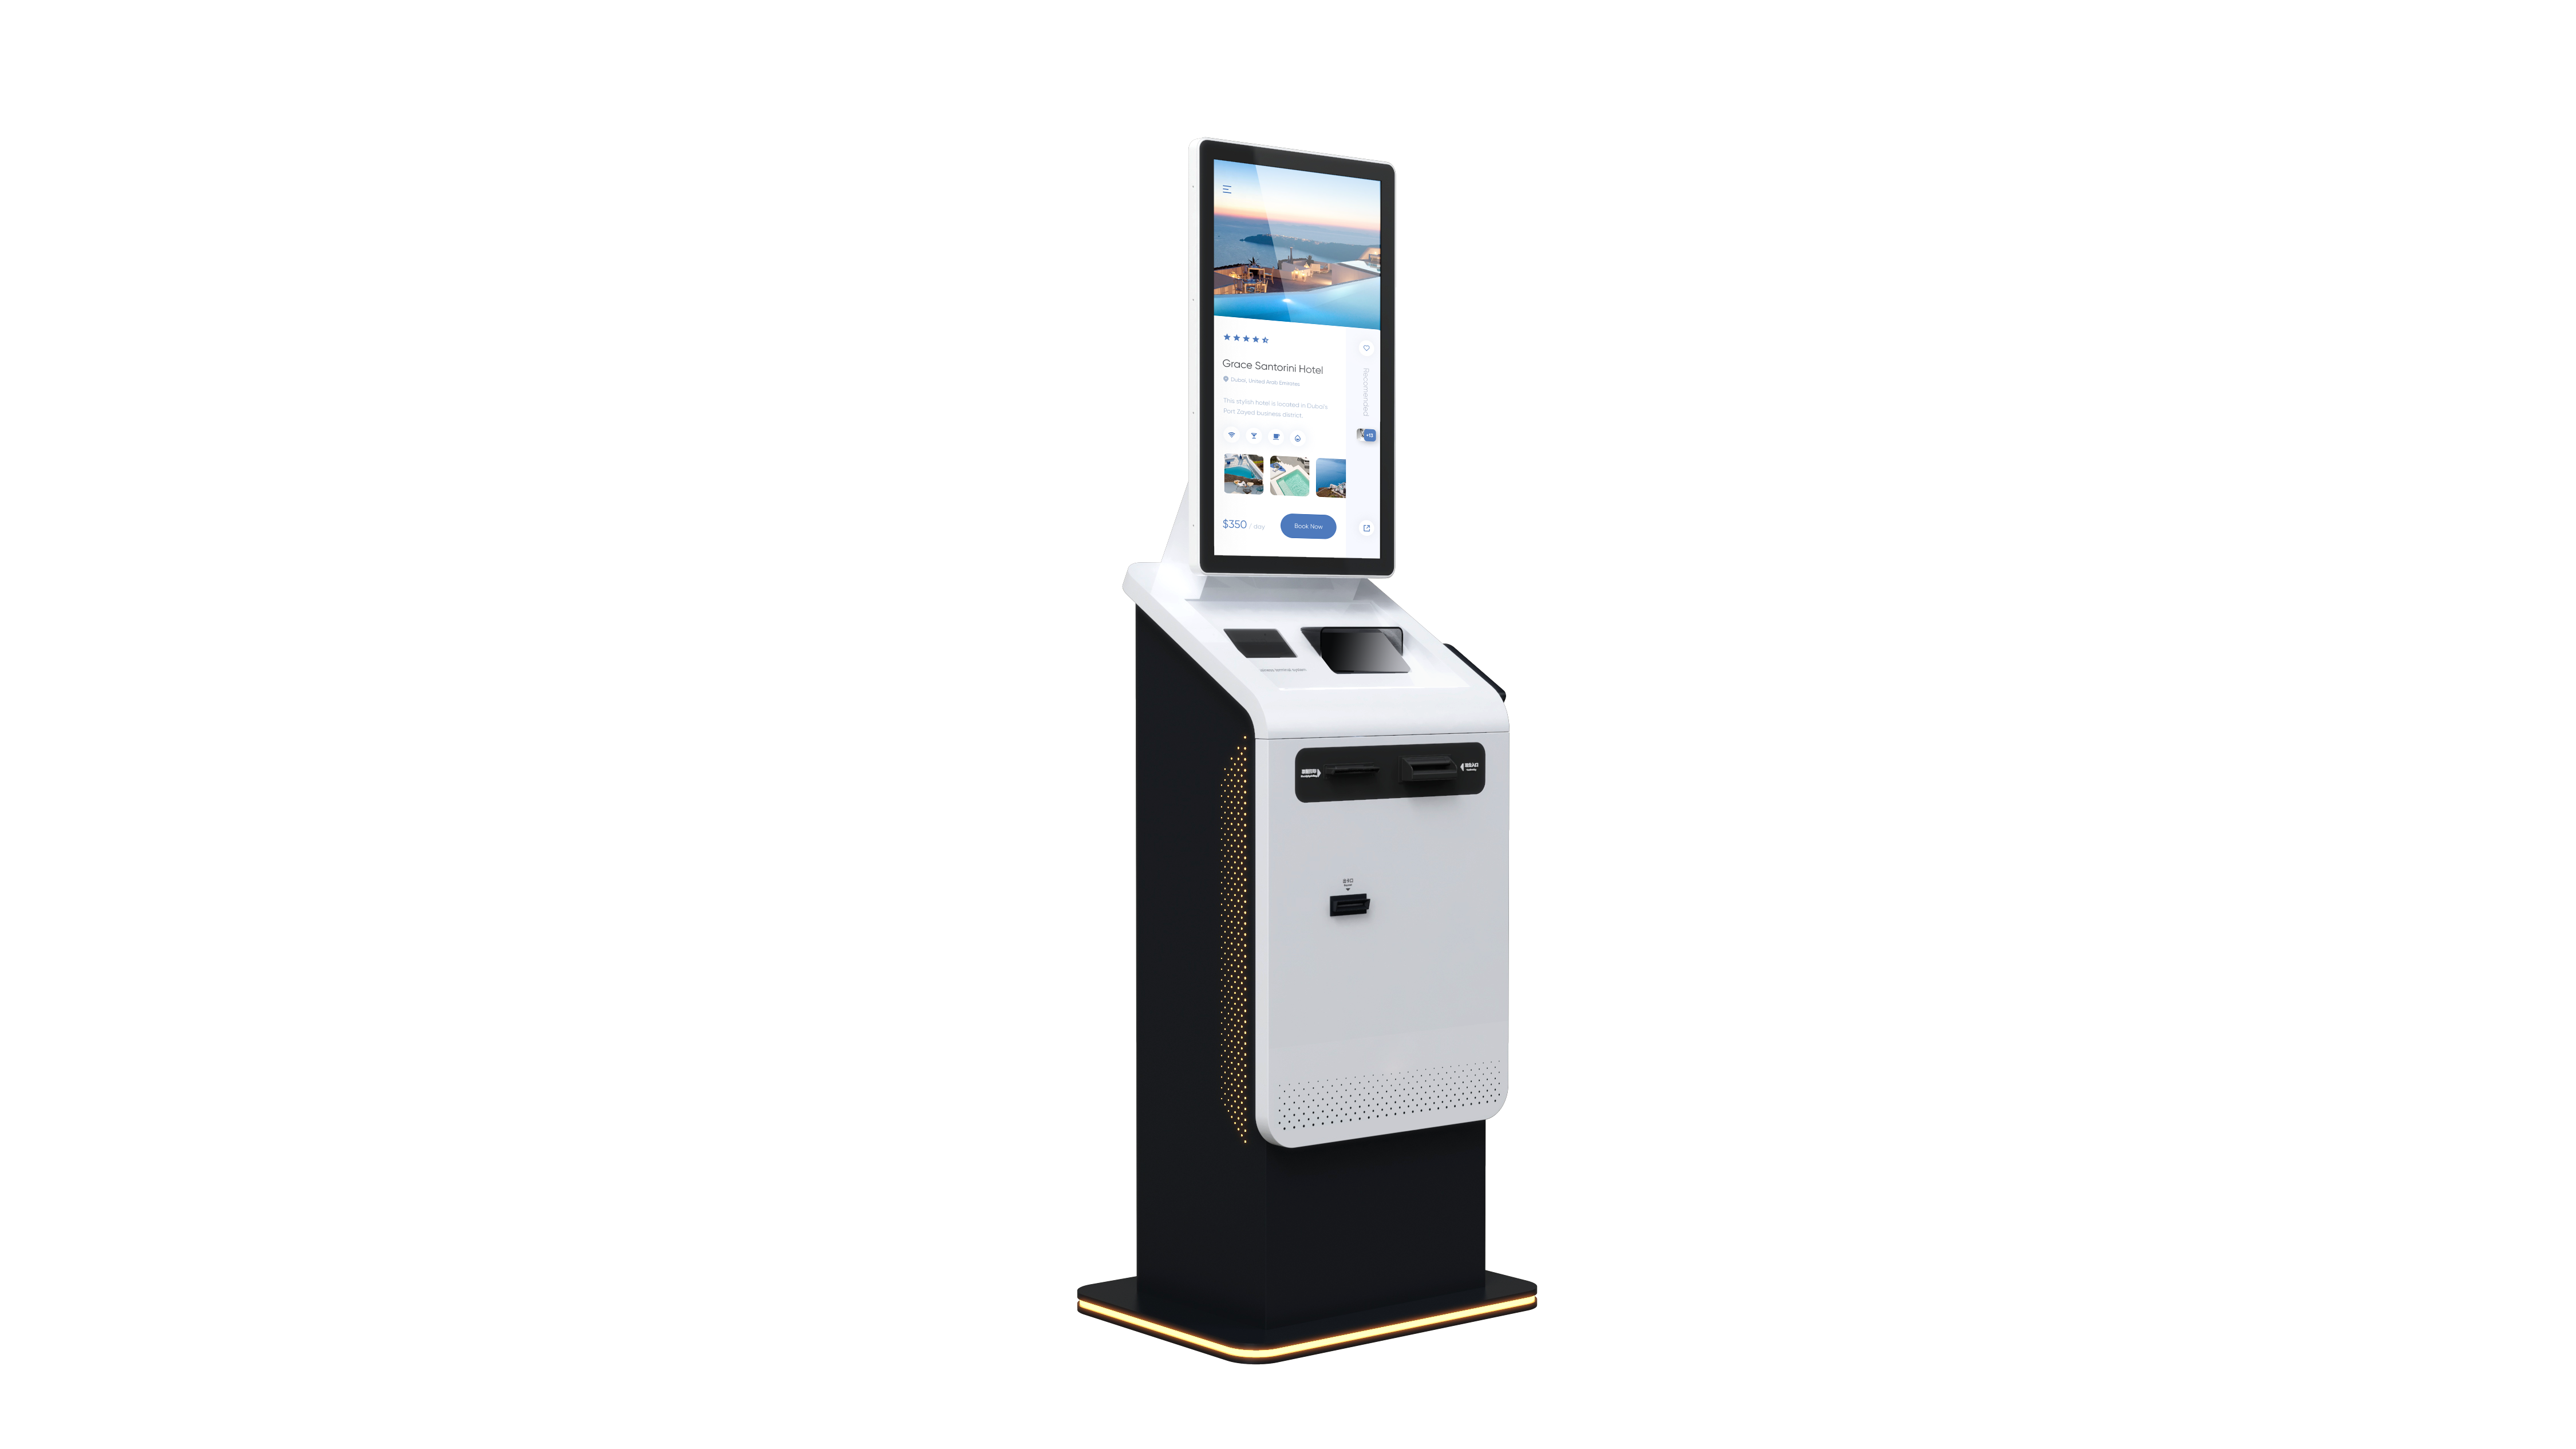 The third generation upgraded full-function kiosk